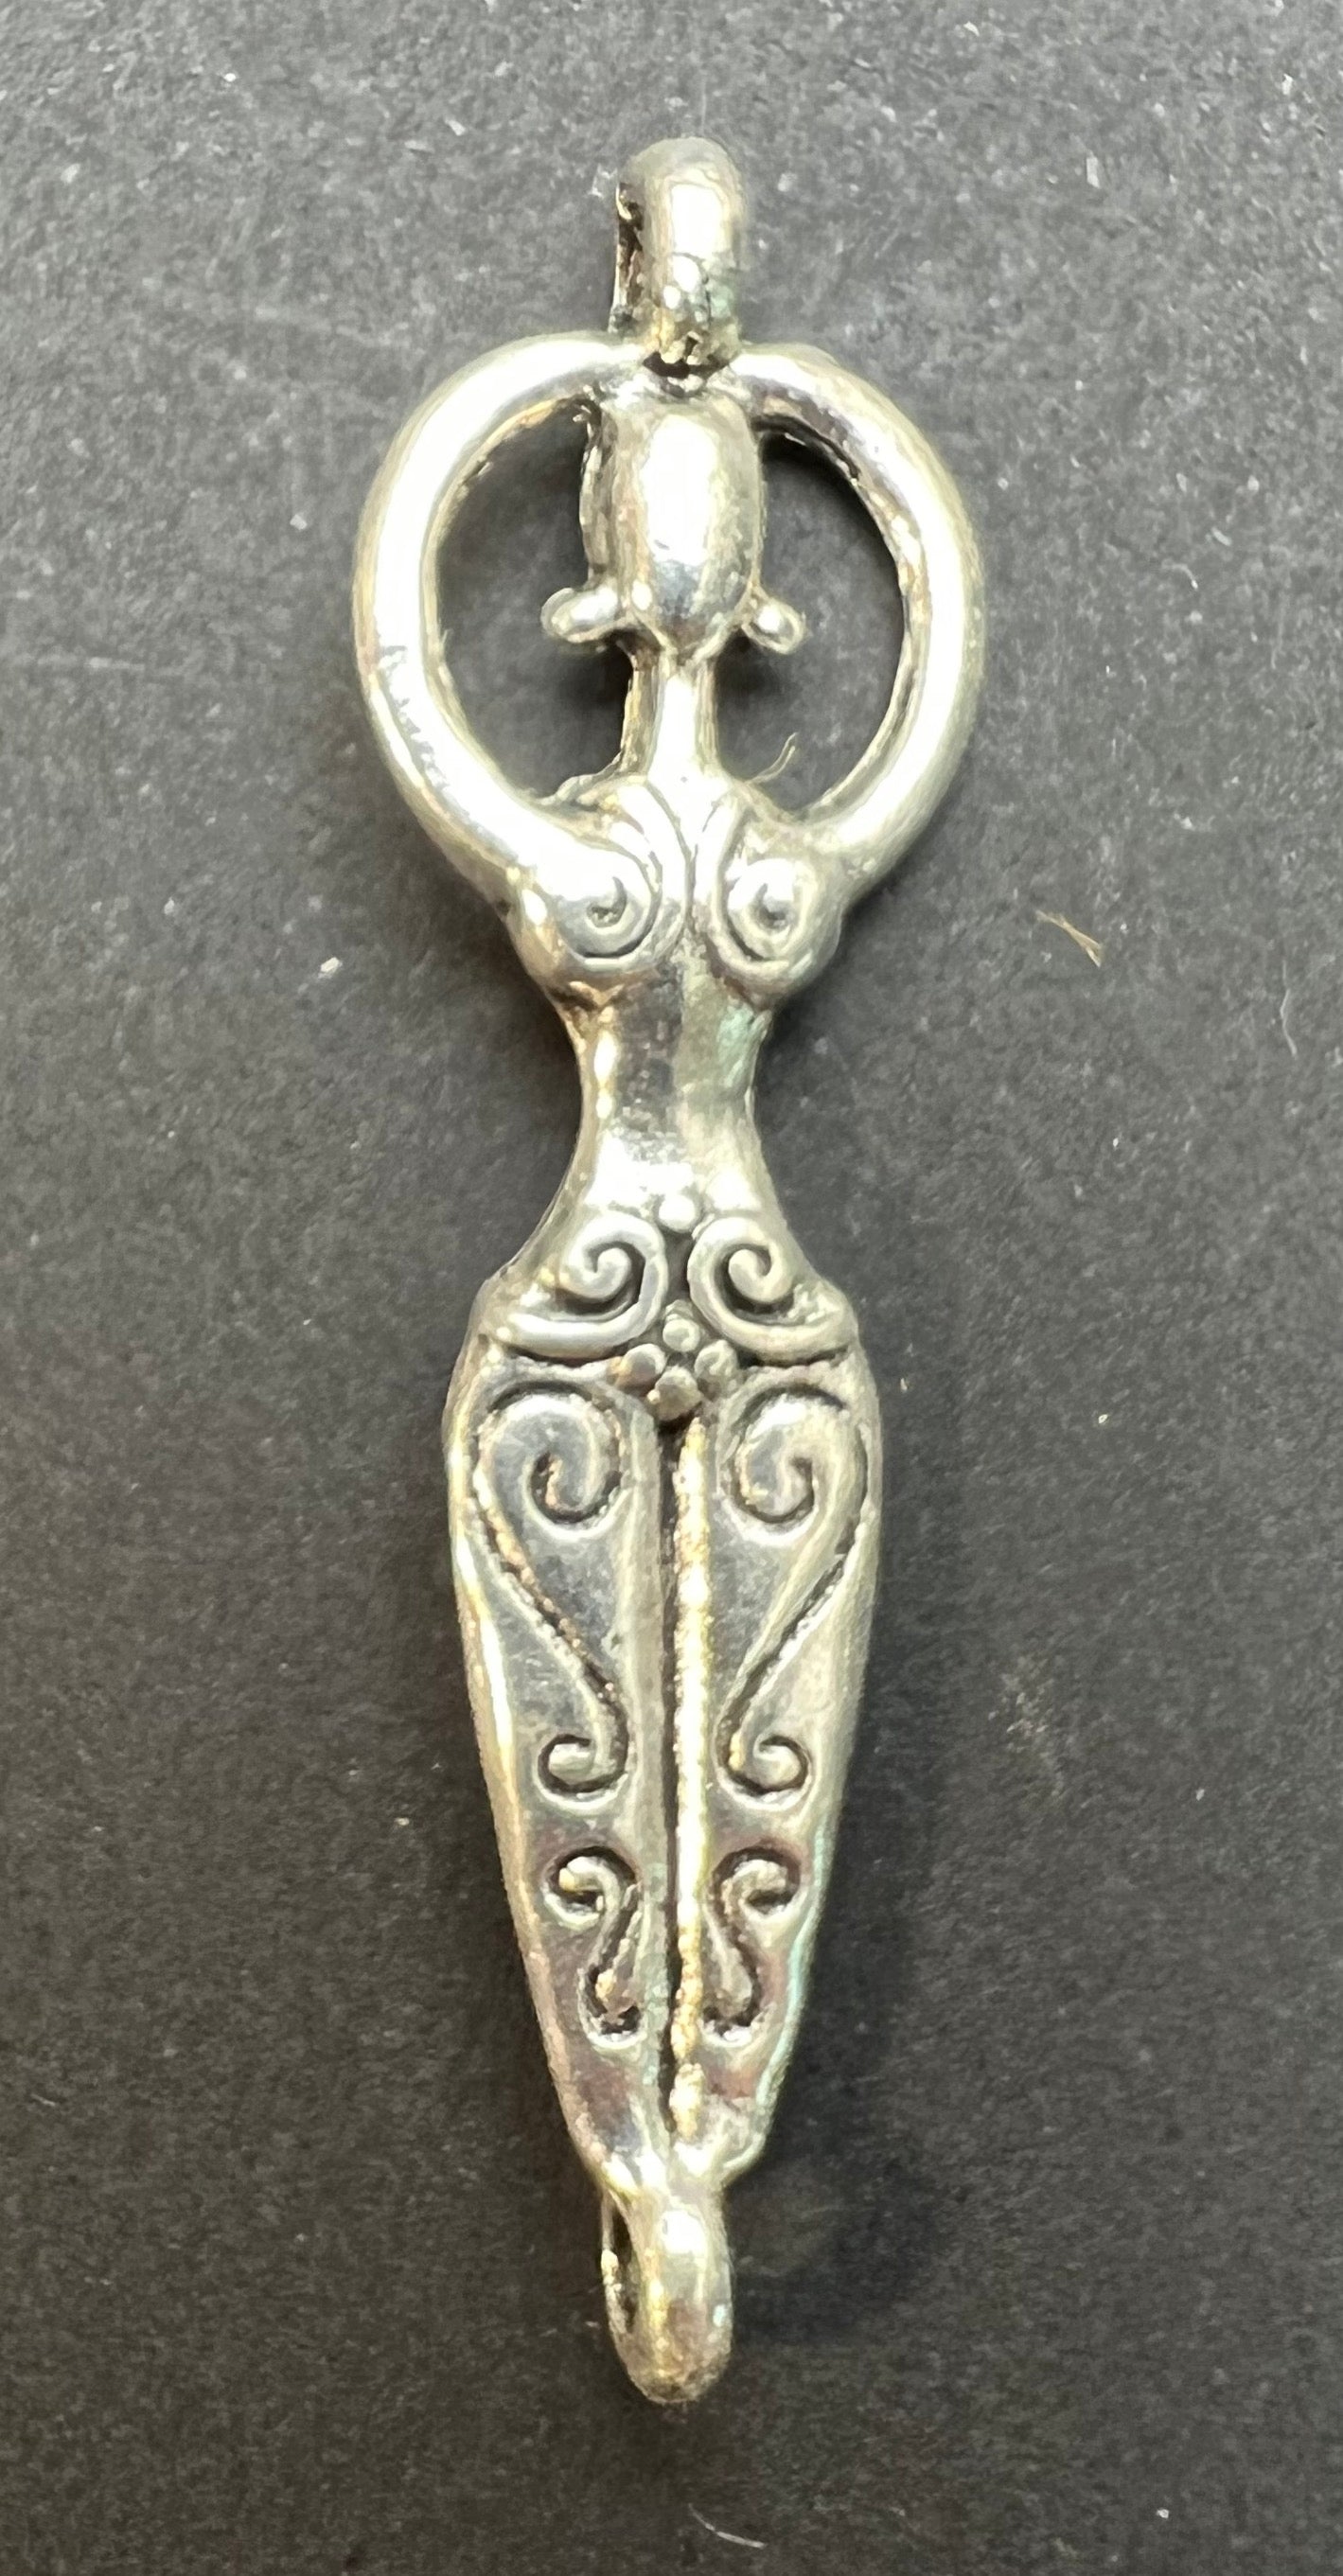 4cm Goddess Charm, Pendant or Link